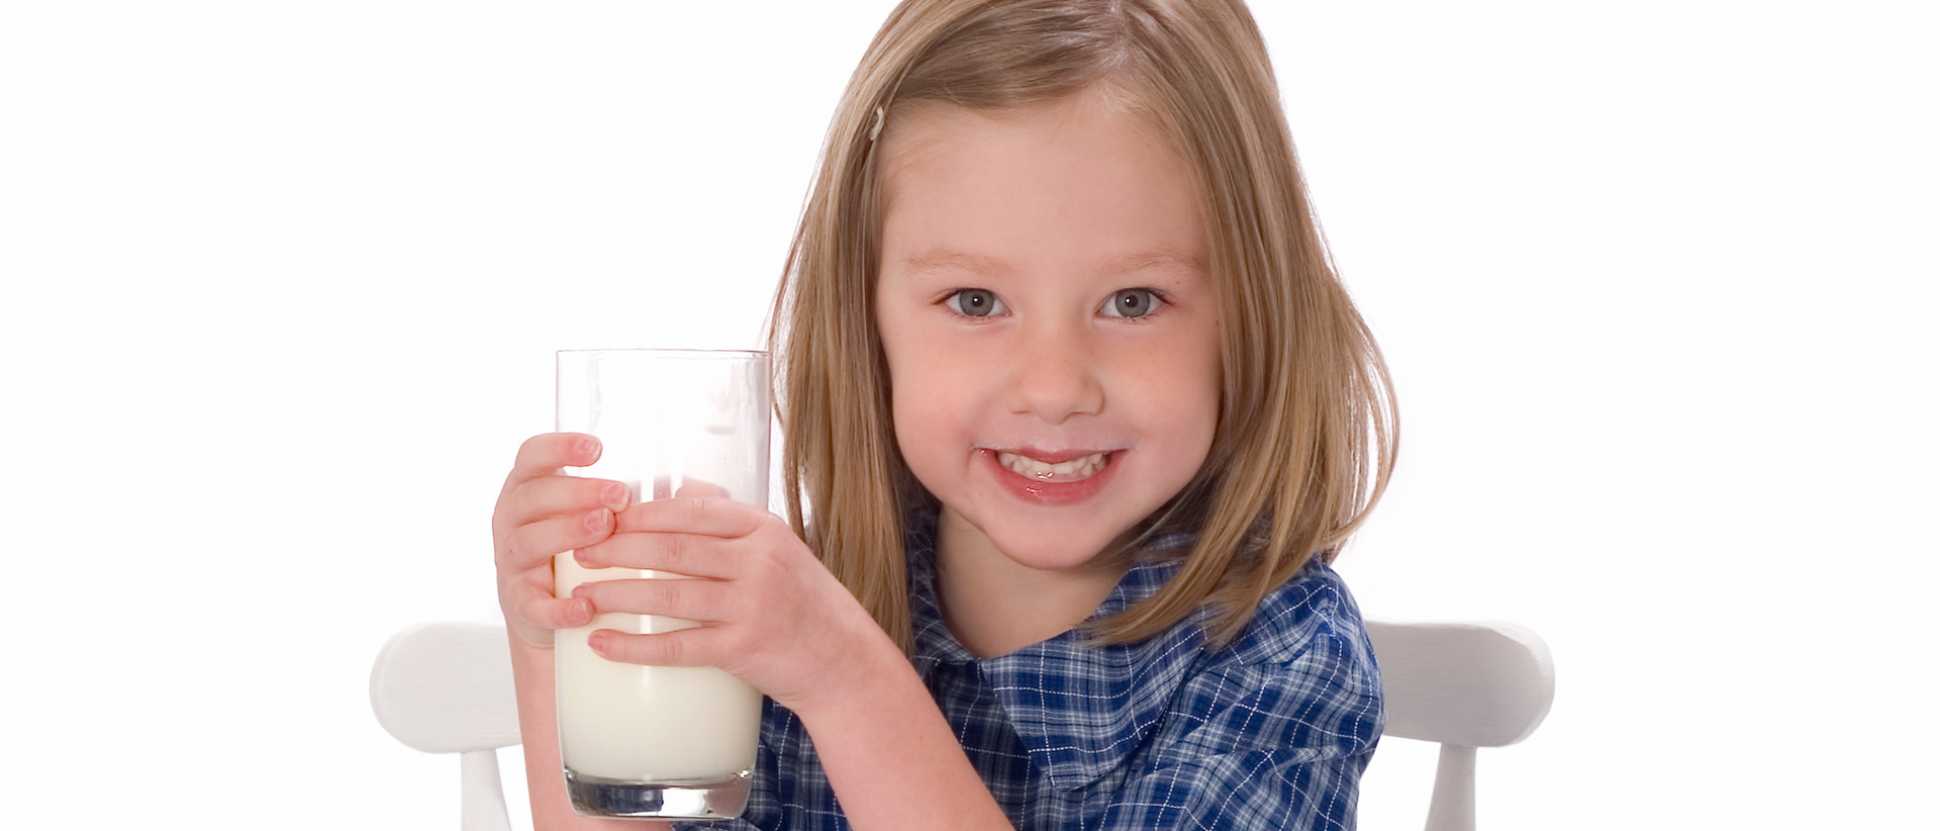 160208-Milk-vitamin-supplements-and-exercise-raise-childrens-vitamin-D-levelsjpg